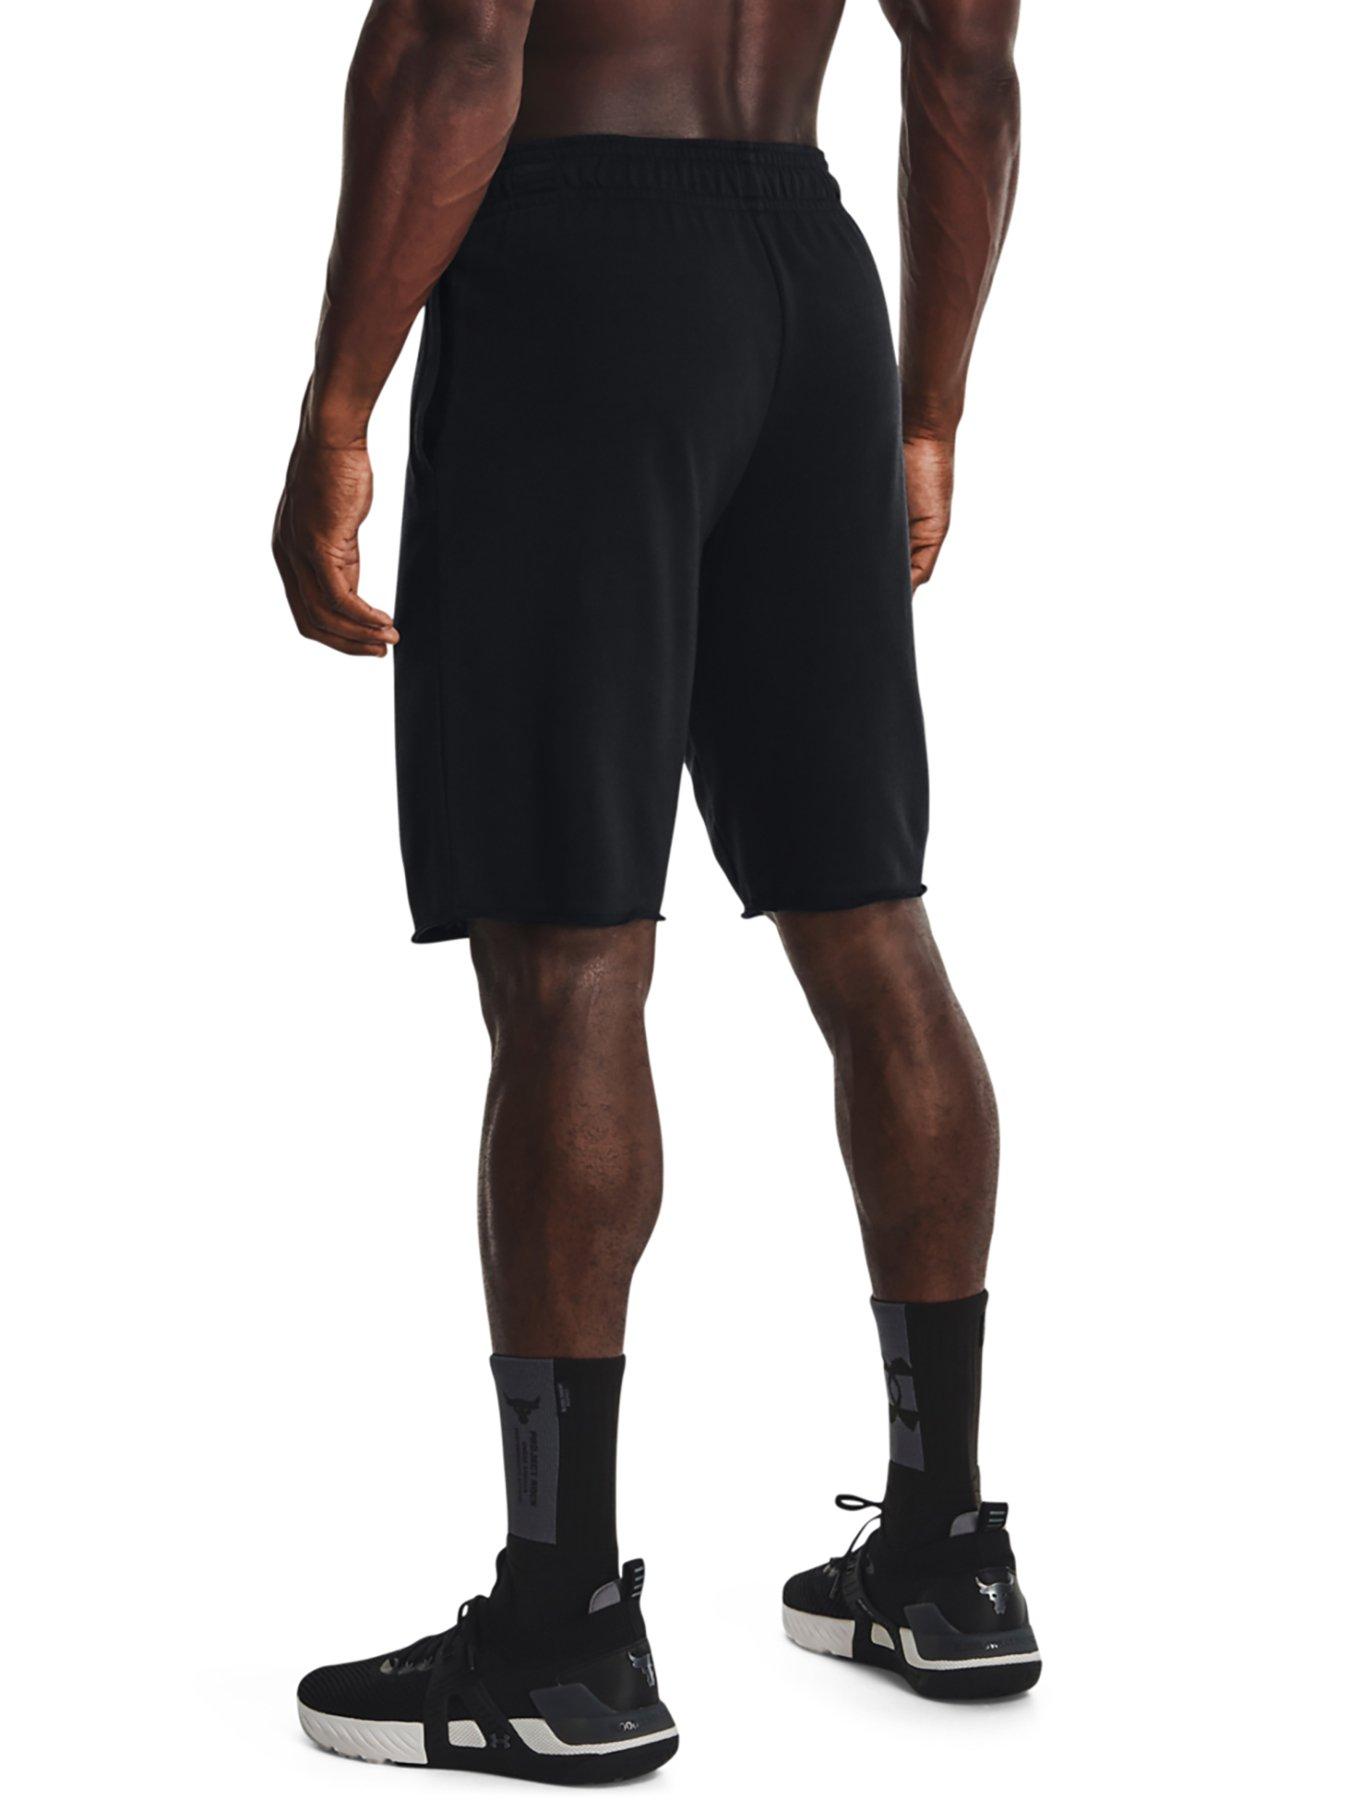 Shorts Training Project Rock Terry Shorts - Black